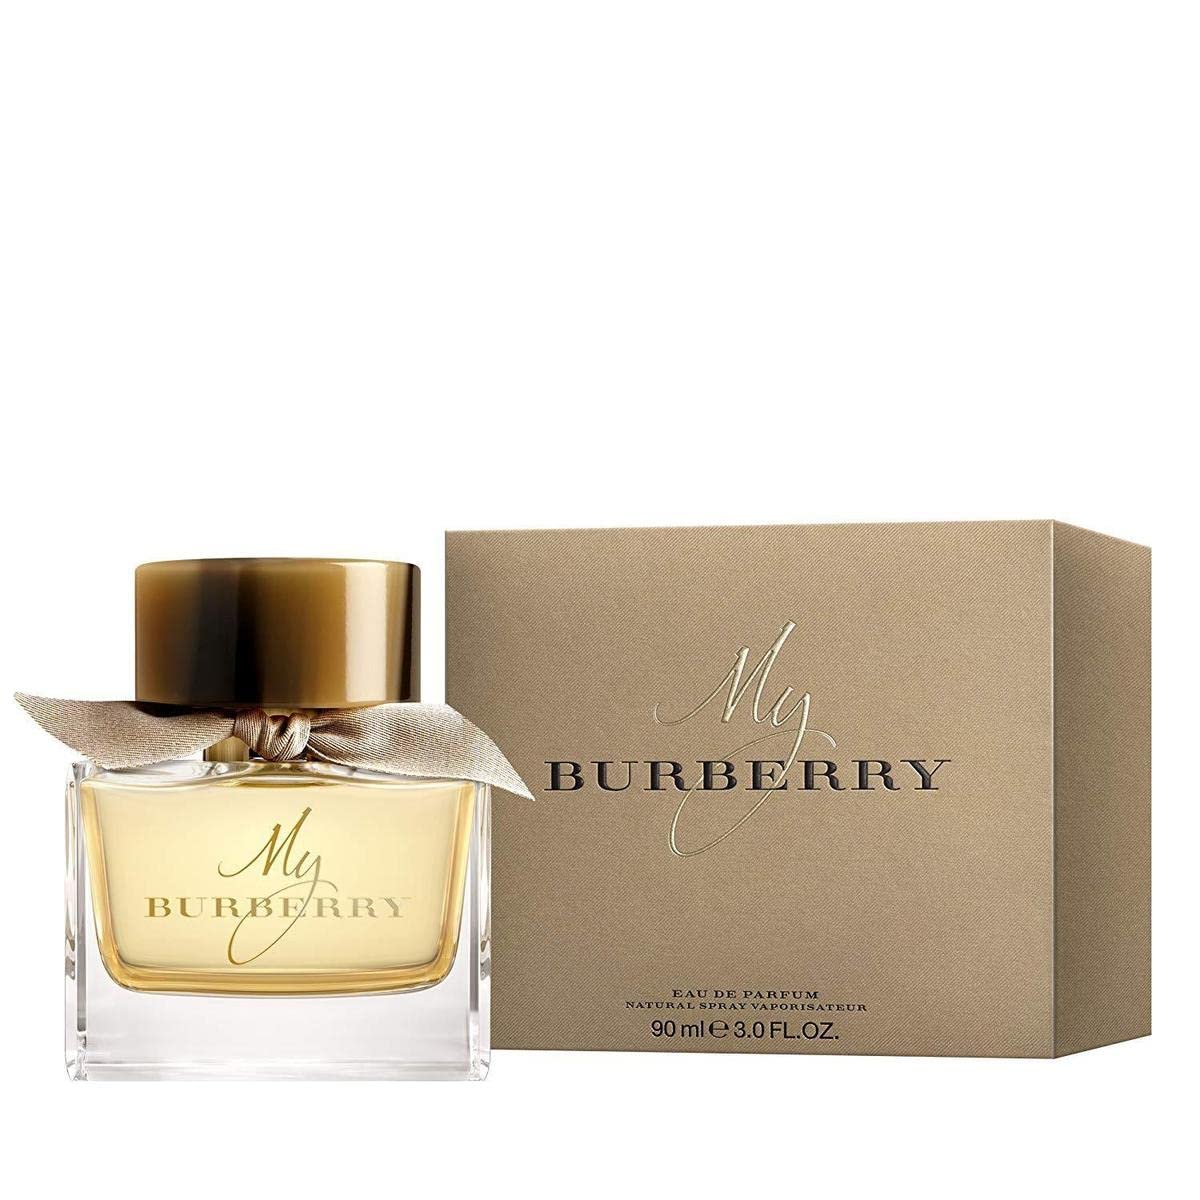 Mua BURBERRY My BURBERRY Eau de Parfum trên Amazon Mỹ chính hãng 2023 |  Giaonhan247